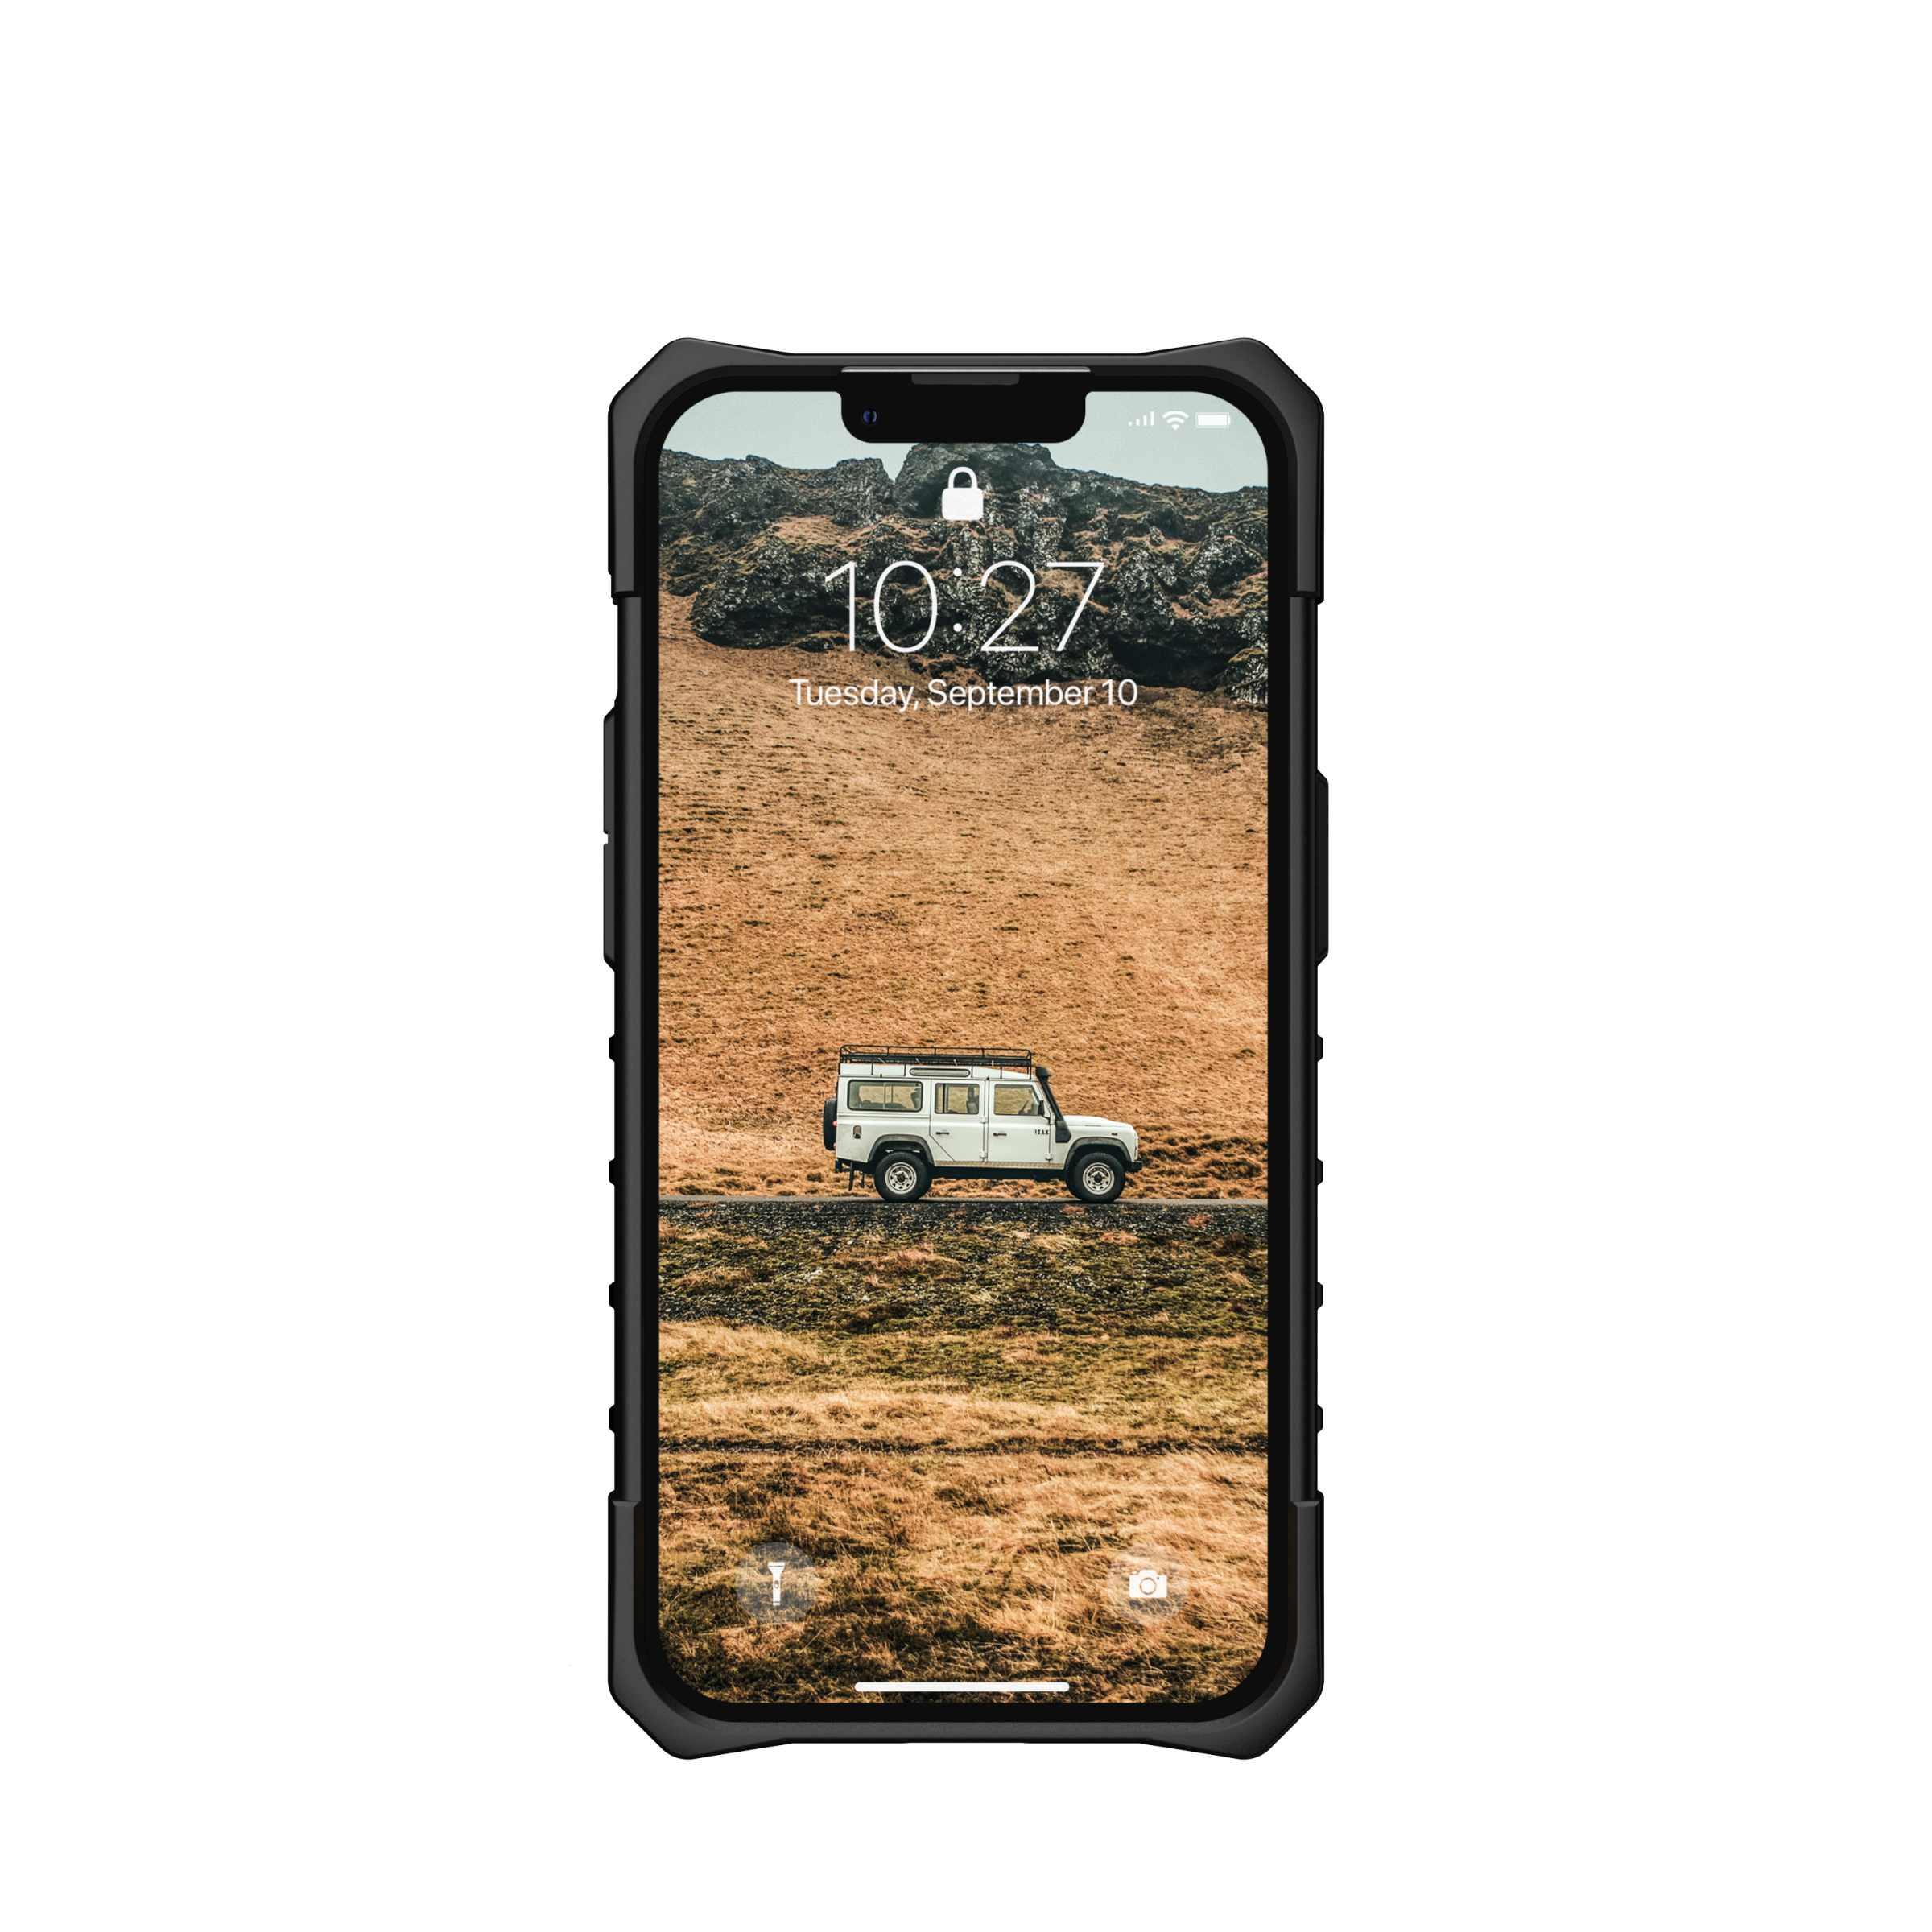 Pathfinder Series Case iPhone 13 Black